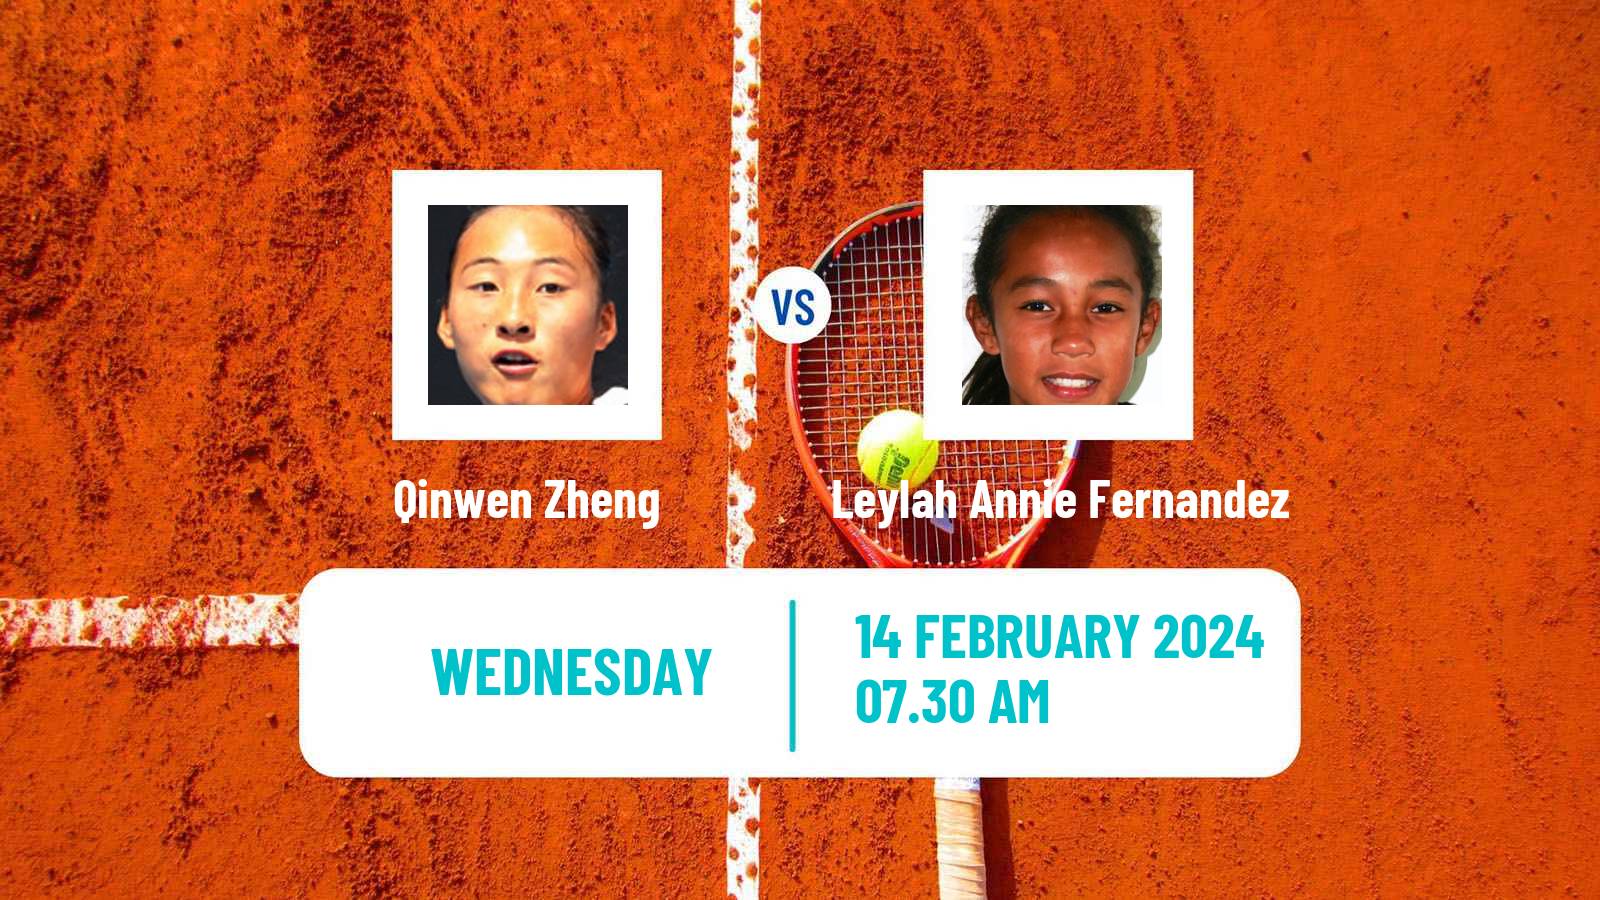 Tennis WTA Doha Qinwen Zheng - Leylah Annie Fernandez